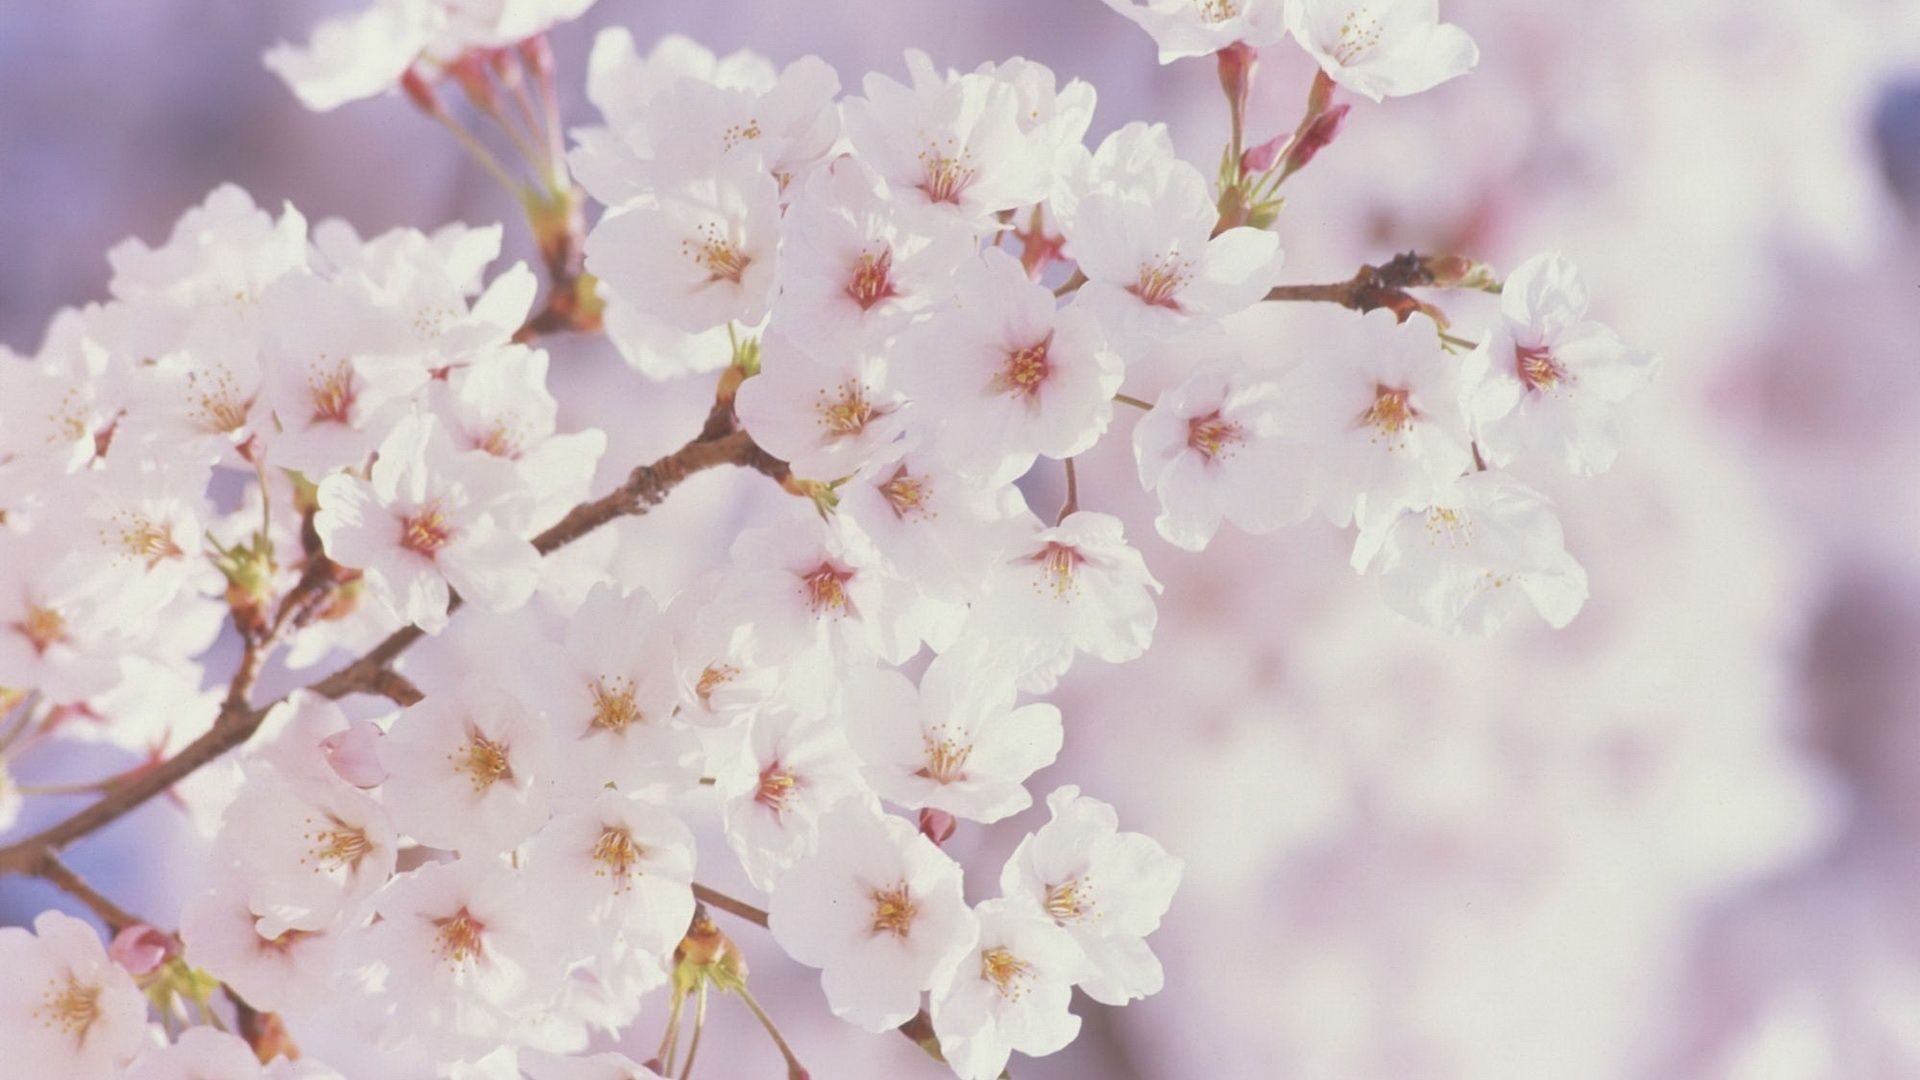 Spring flowers - Spring Wallpaper (22176495) - Fanpop